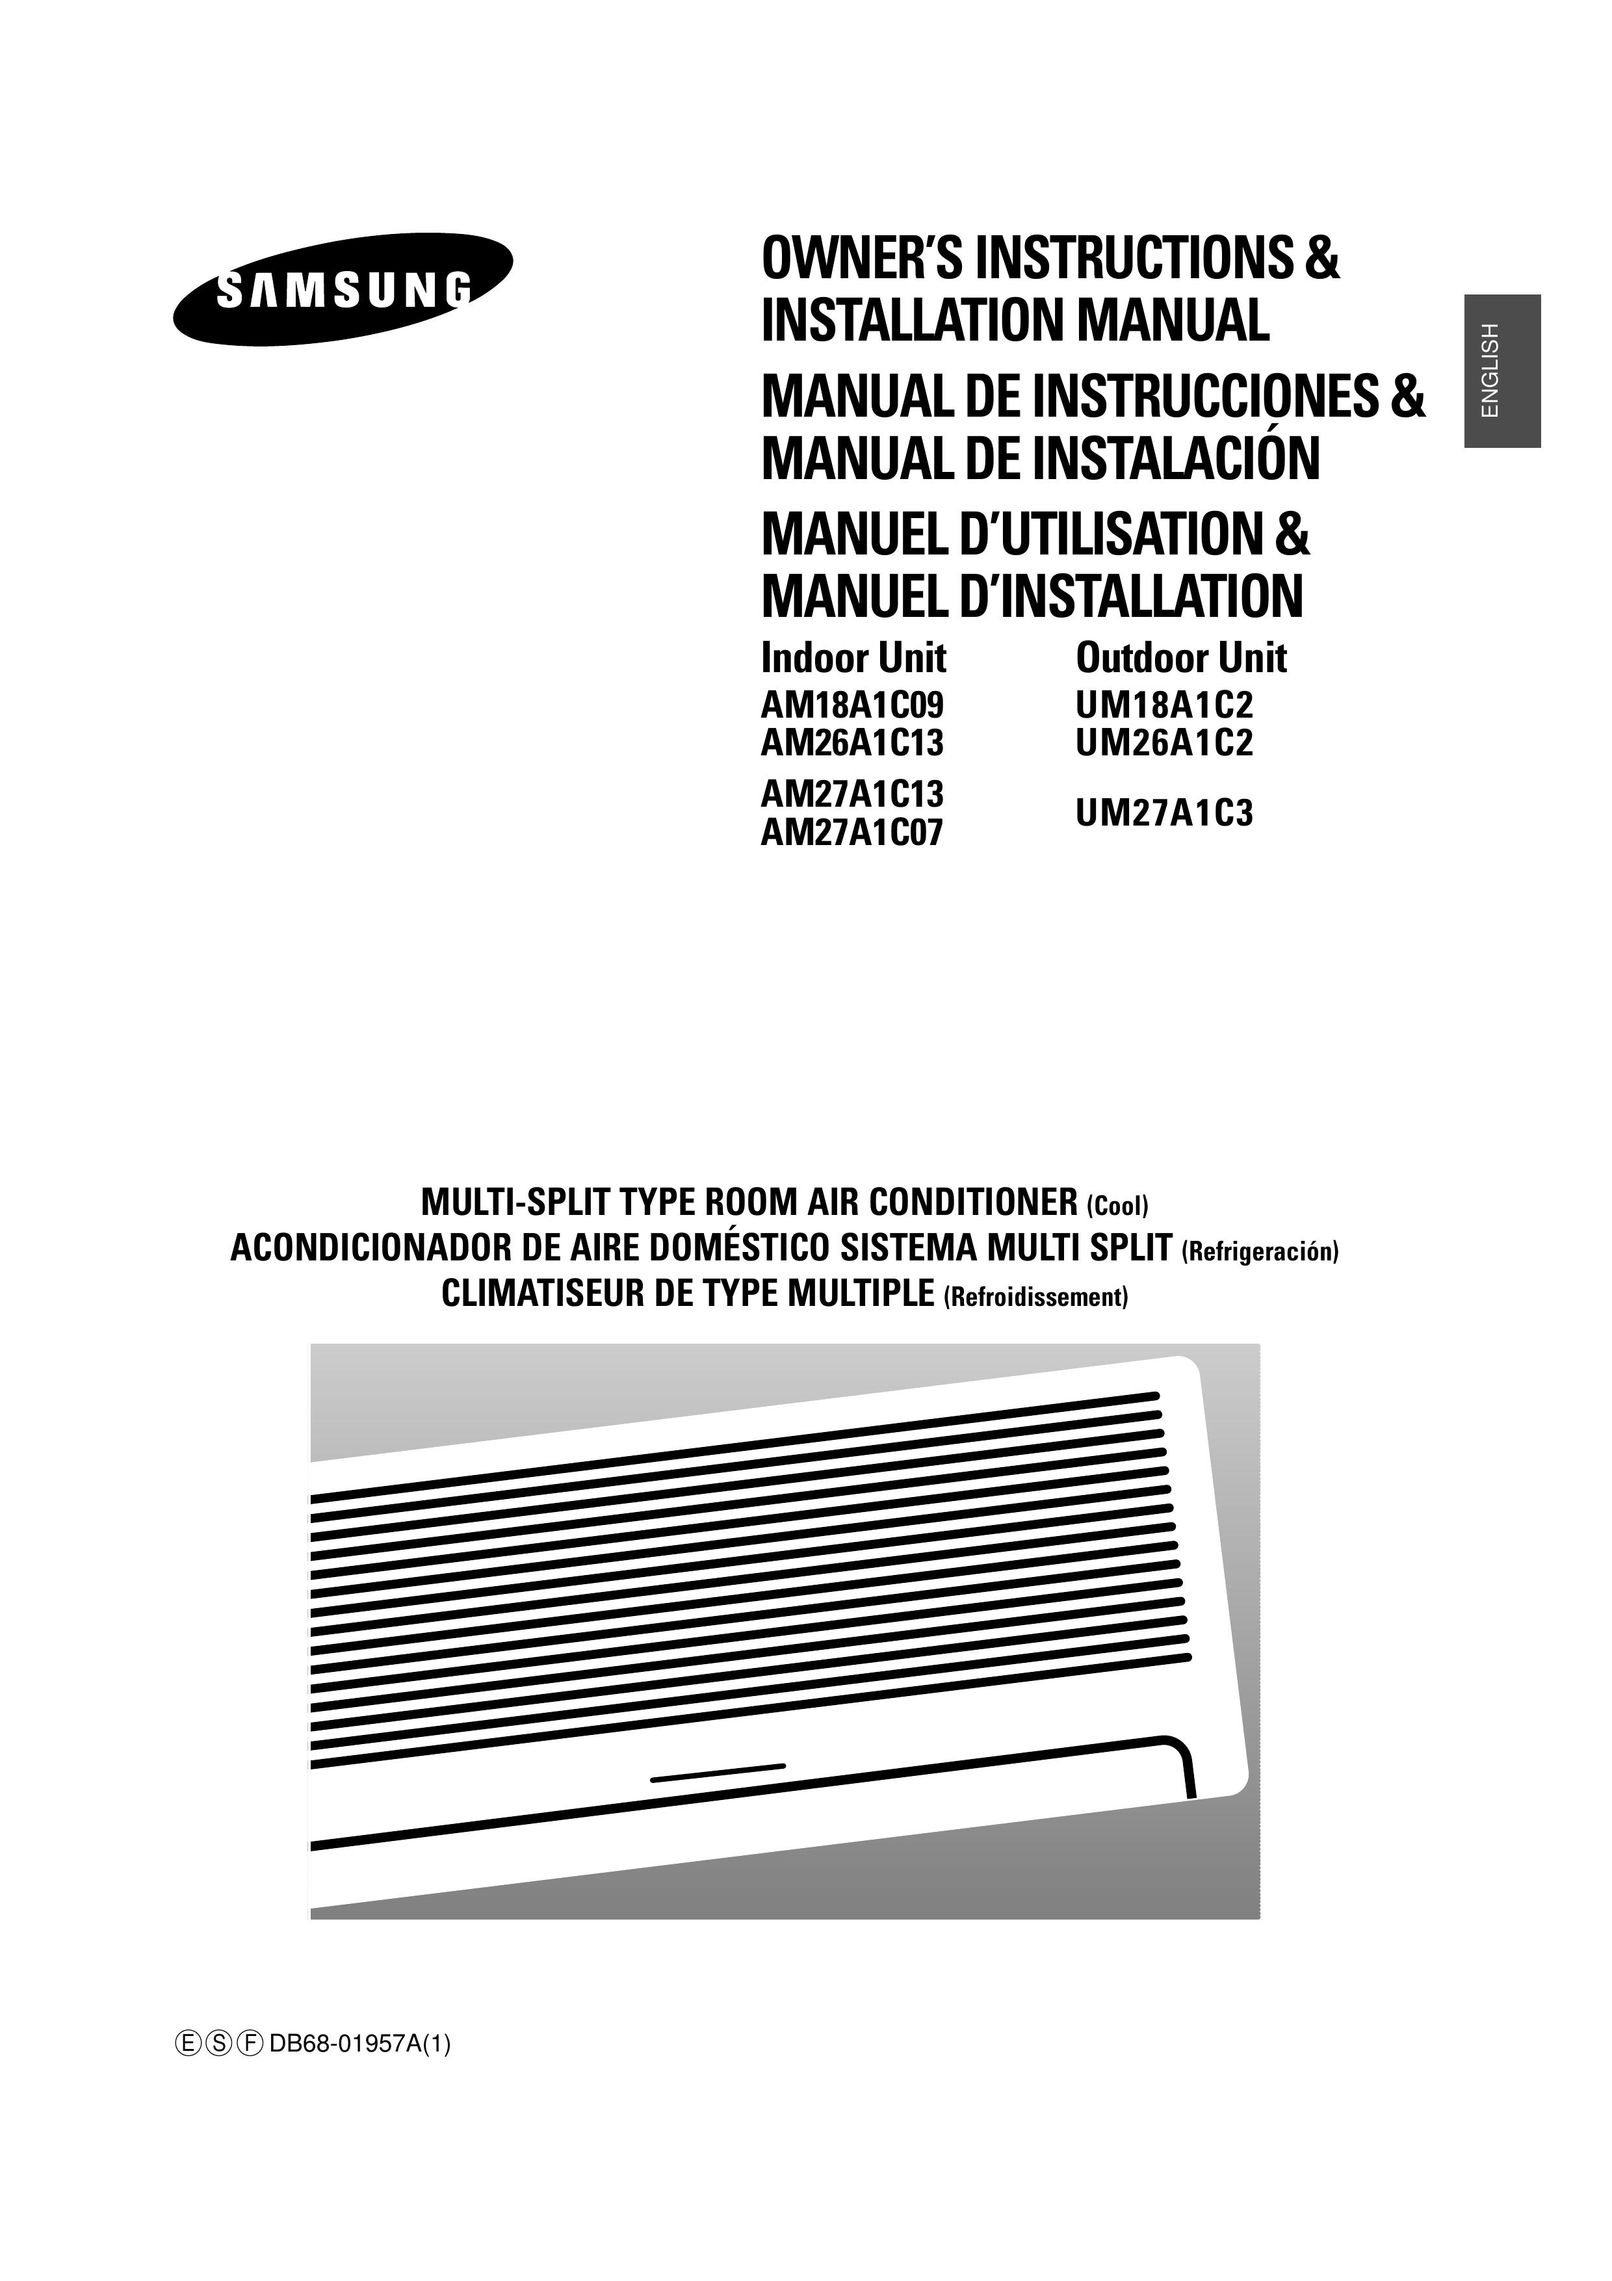 Samsung AM27A1C07 Air Conditioner User Manual